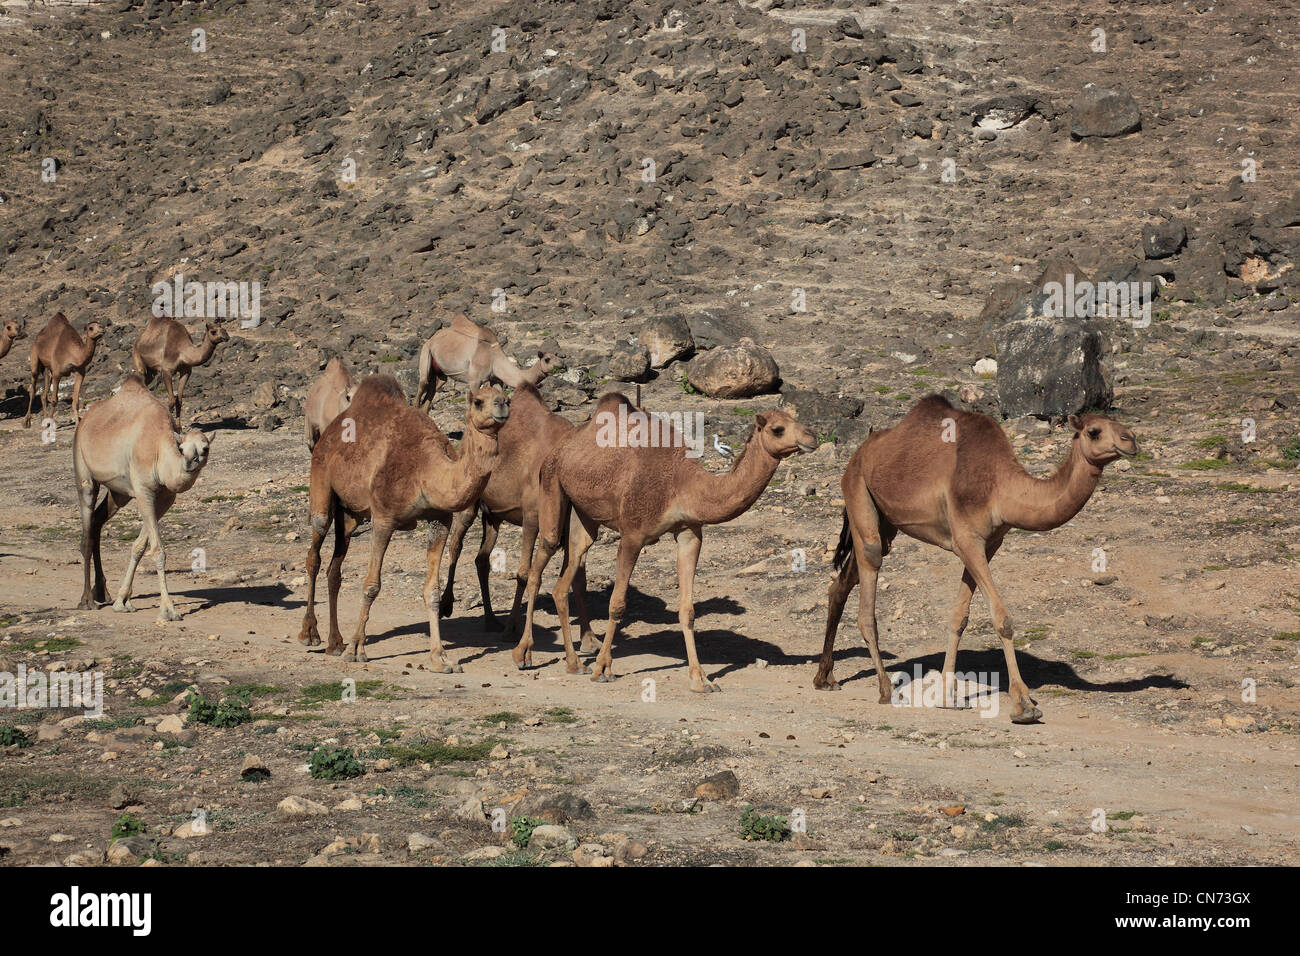 Kamelherde im Dhofargebiet, Jabal al Qamar, Südlicher Oman Stock Photo